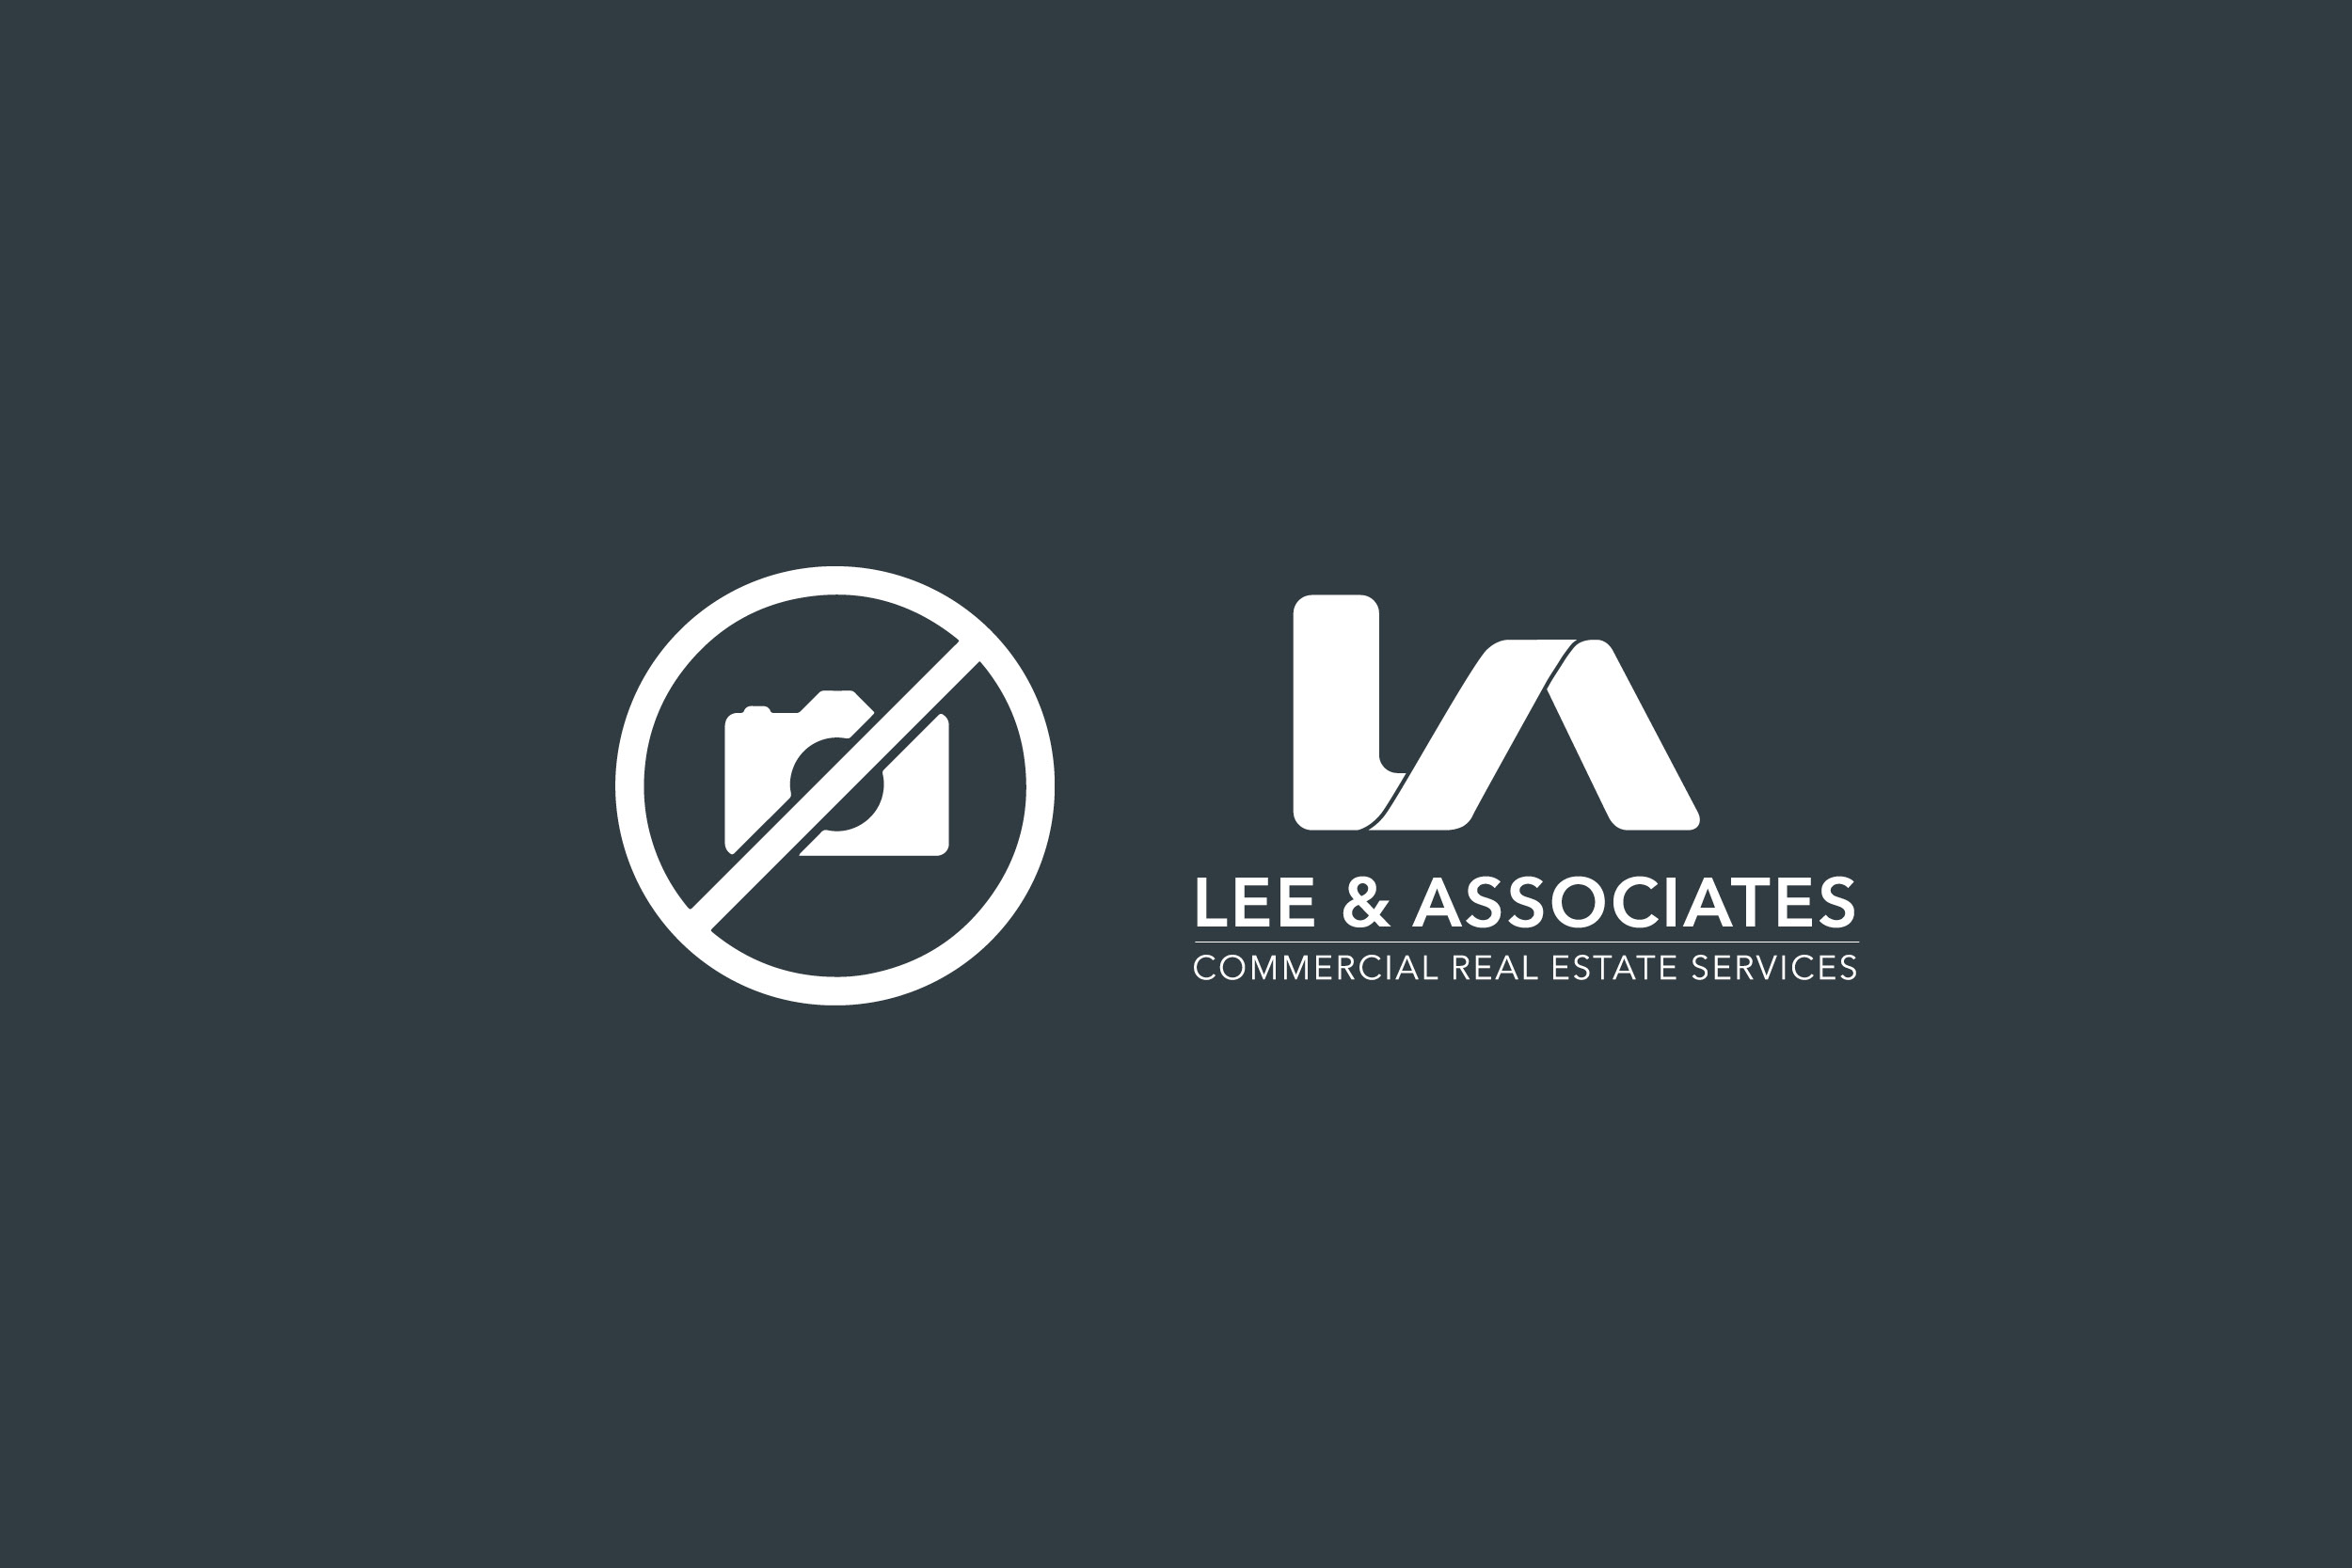 Lee & Associates Dallas Fort Worth Negotiates a 20,020 SF Industrial Lease Transaction